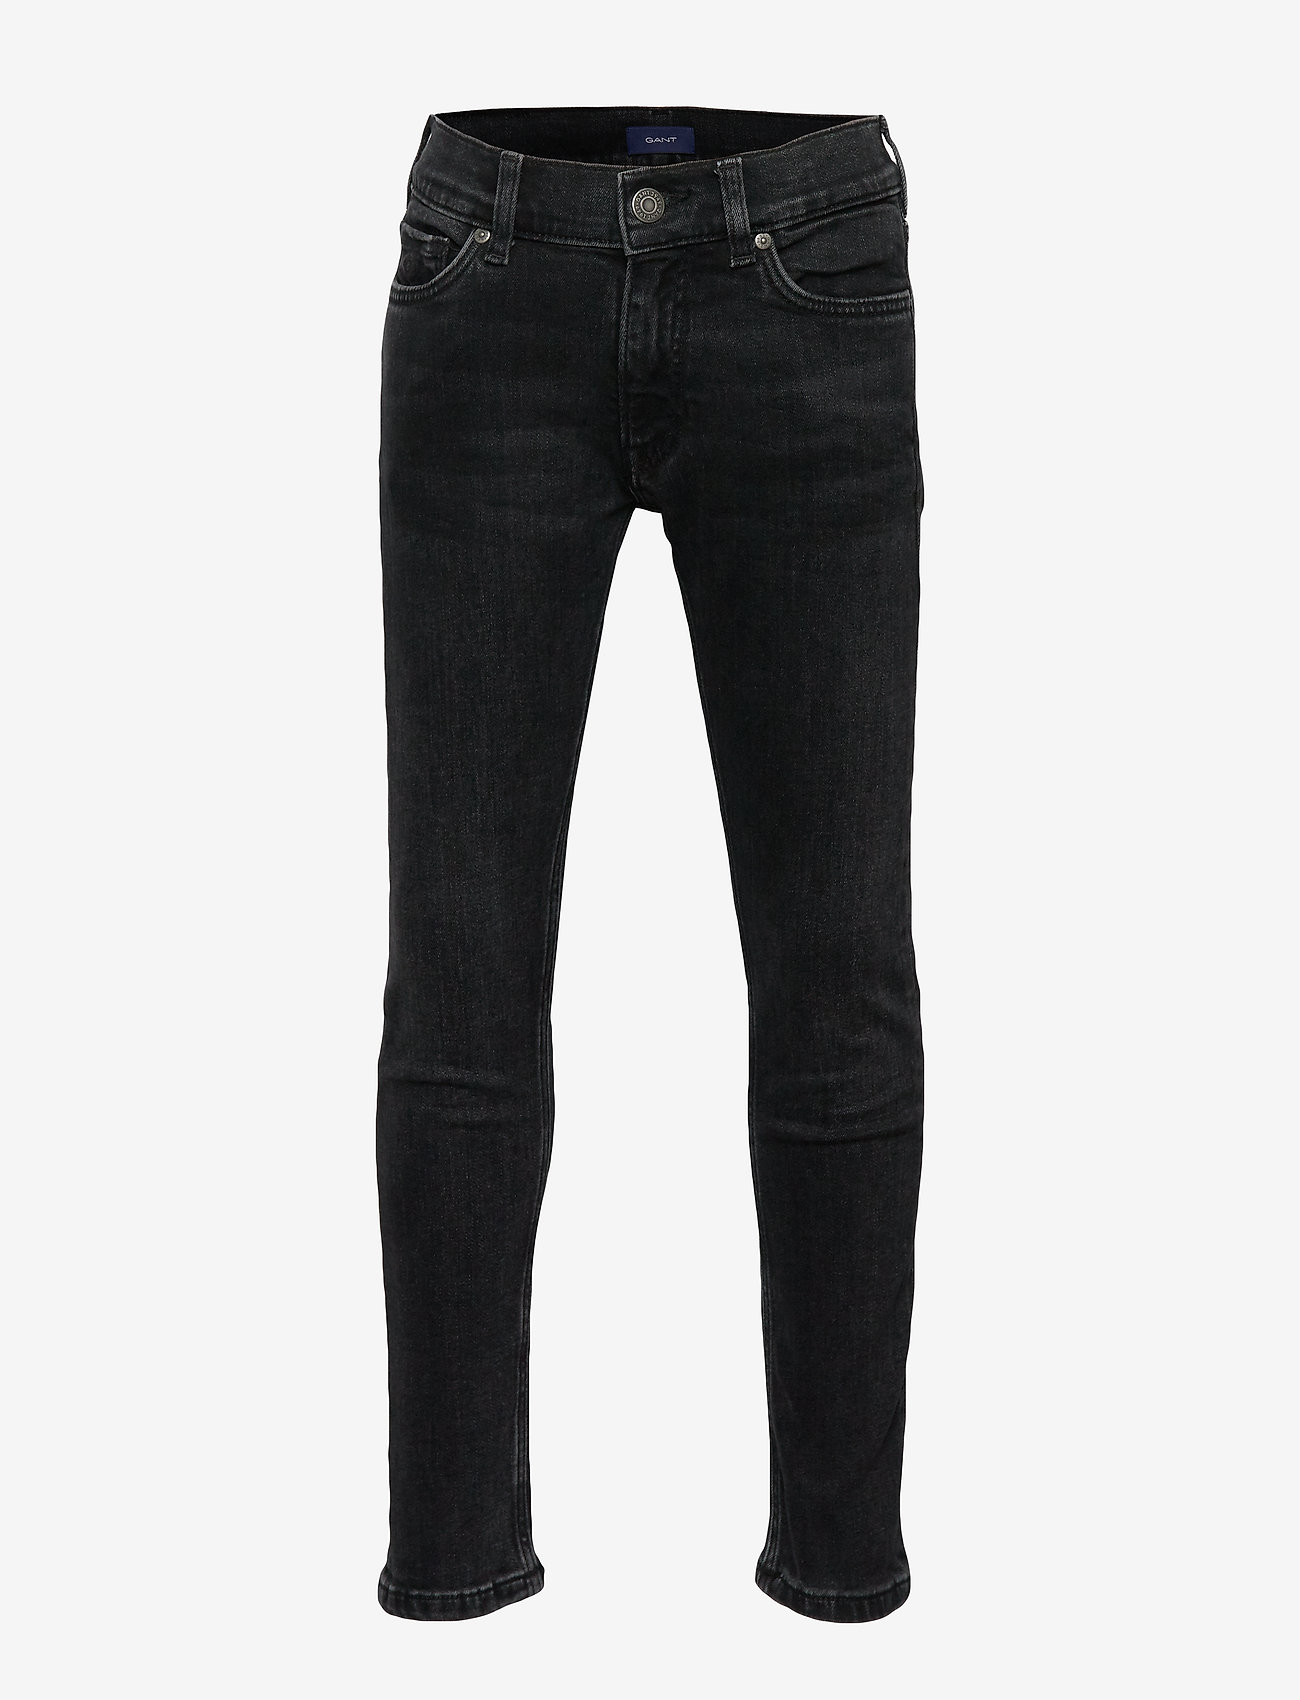 GANT - GANT SLIM JEANS - jeans - black raw - 0